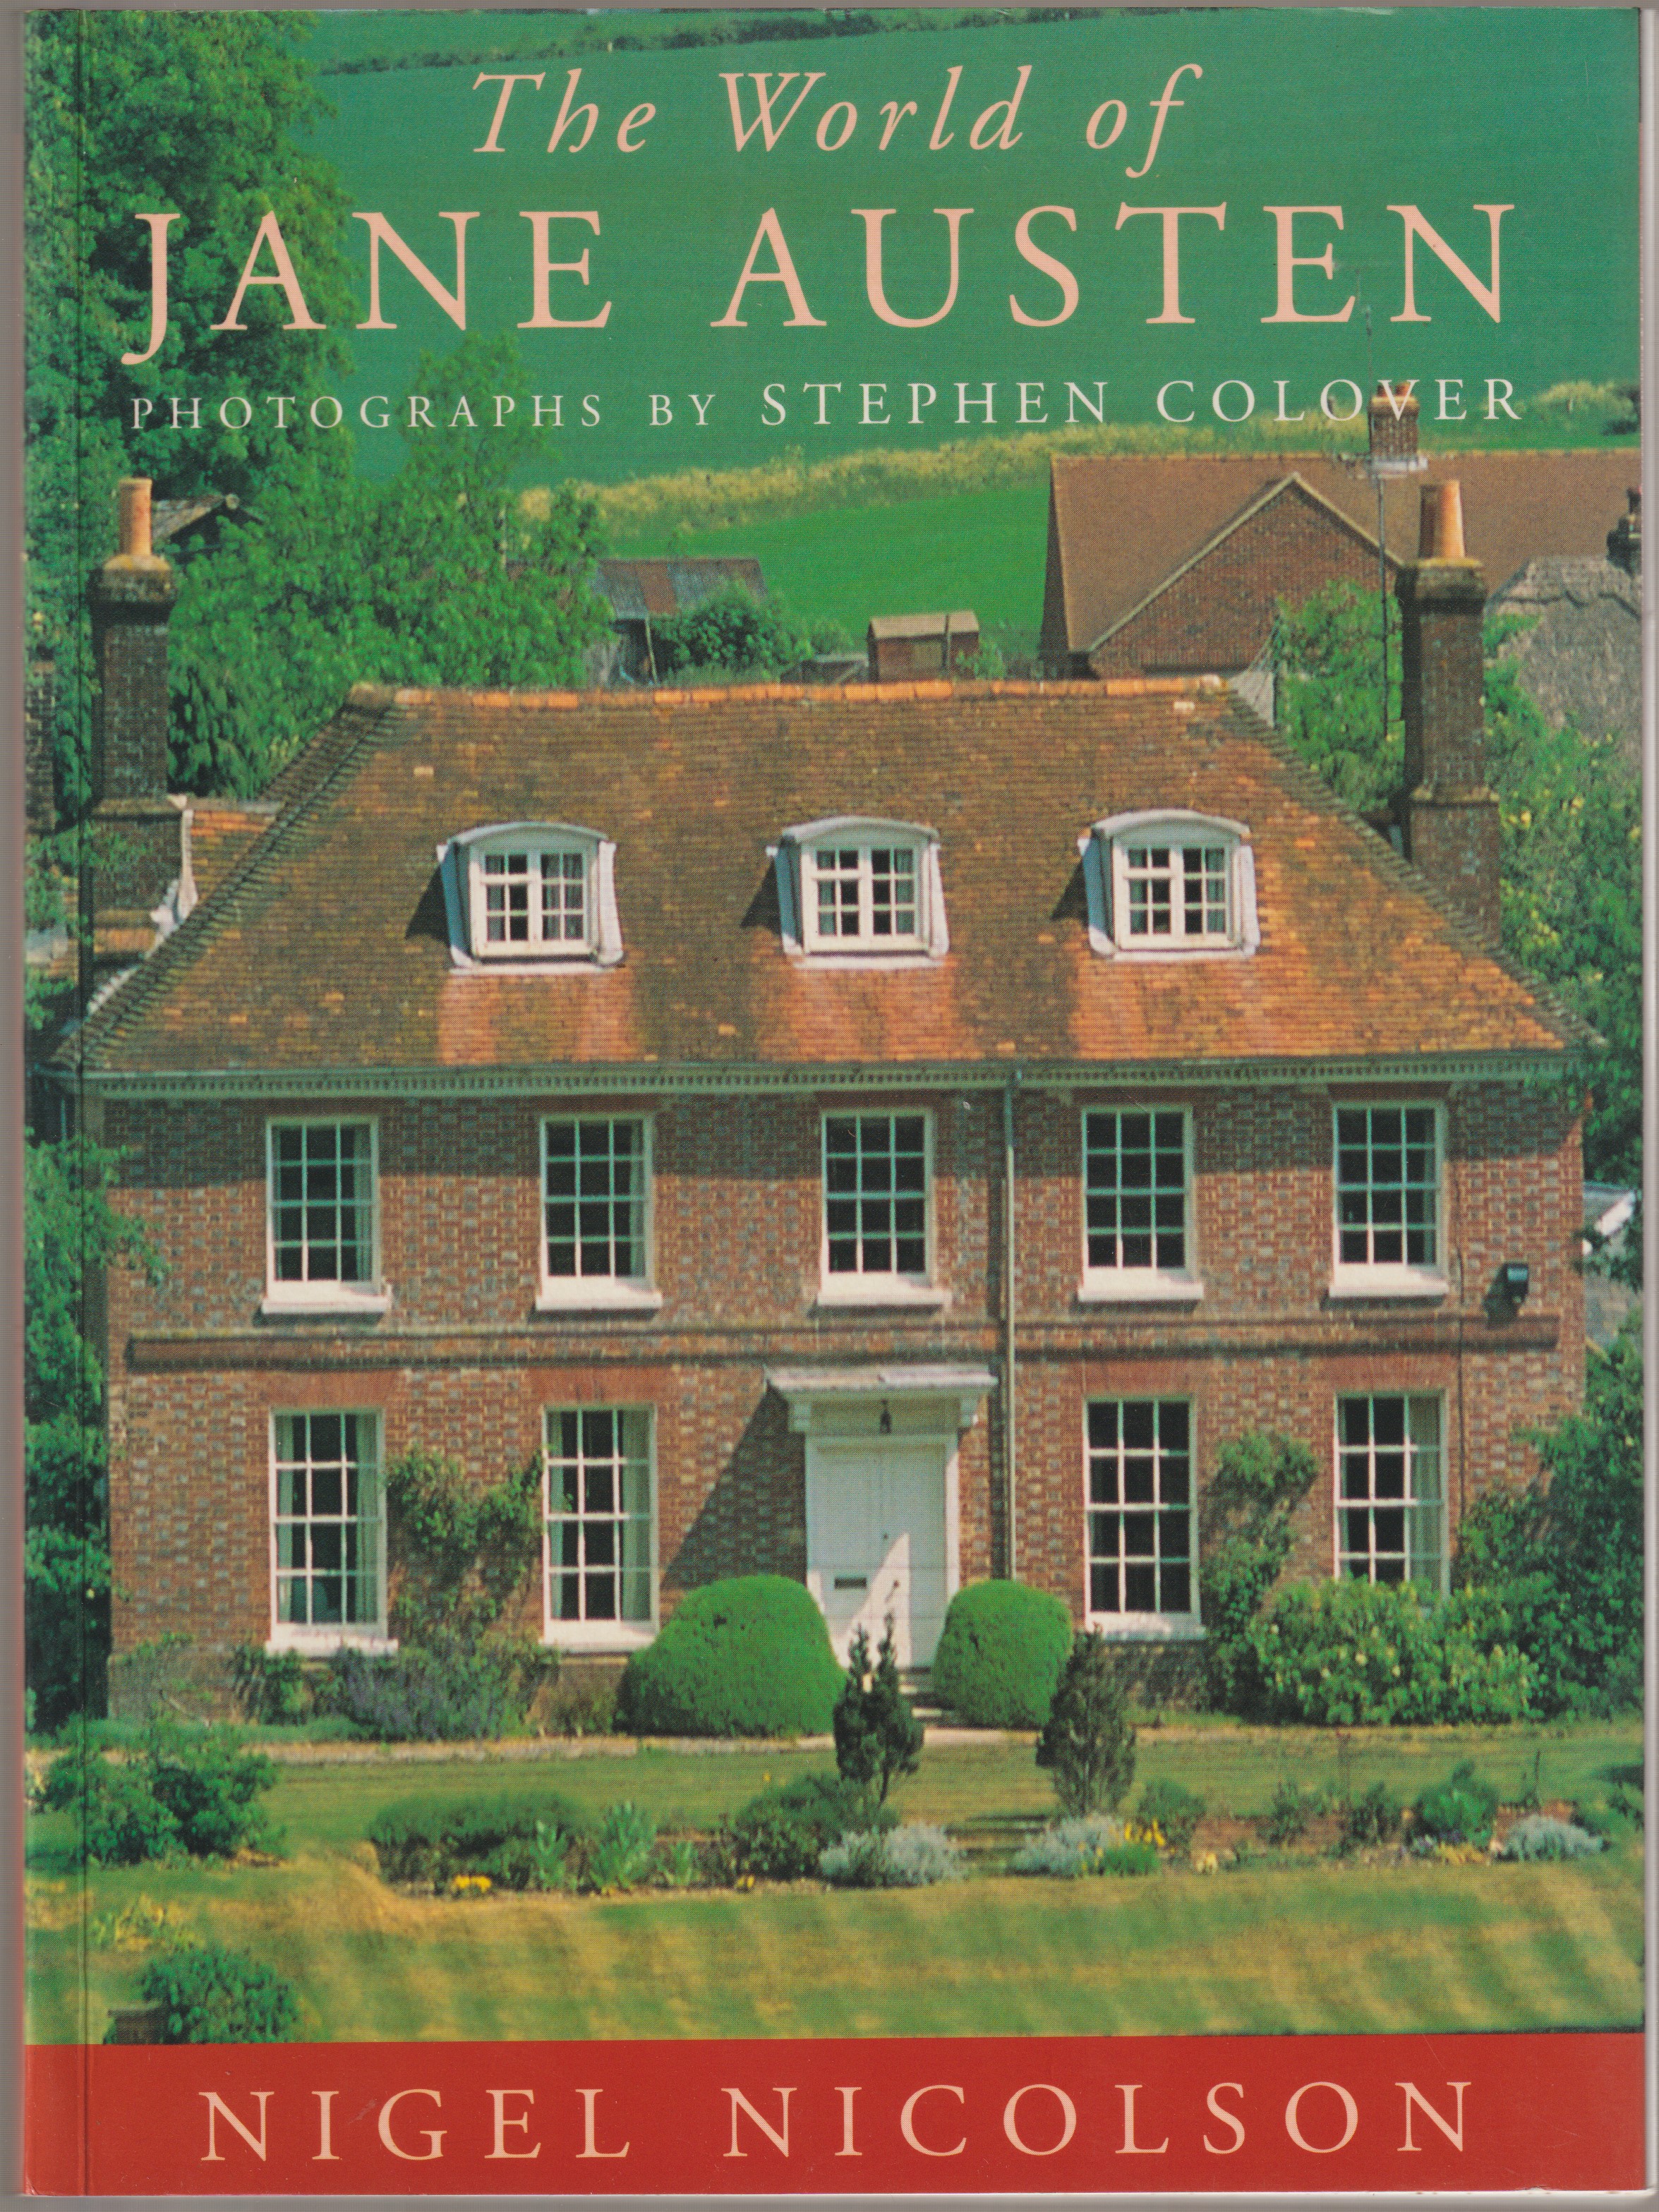 The world of Jane Austen